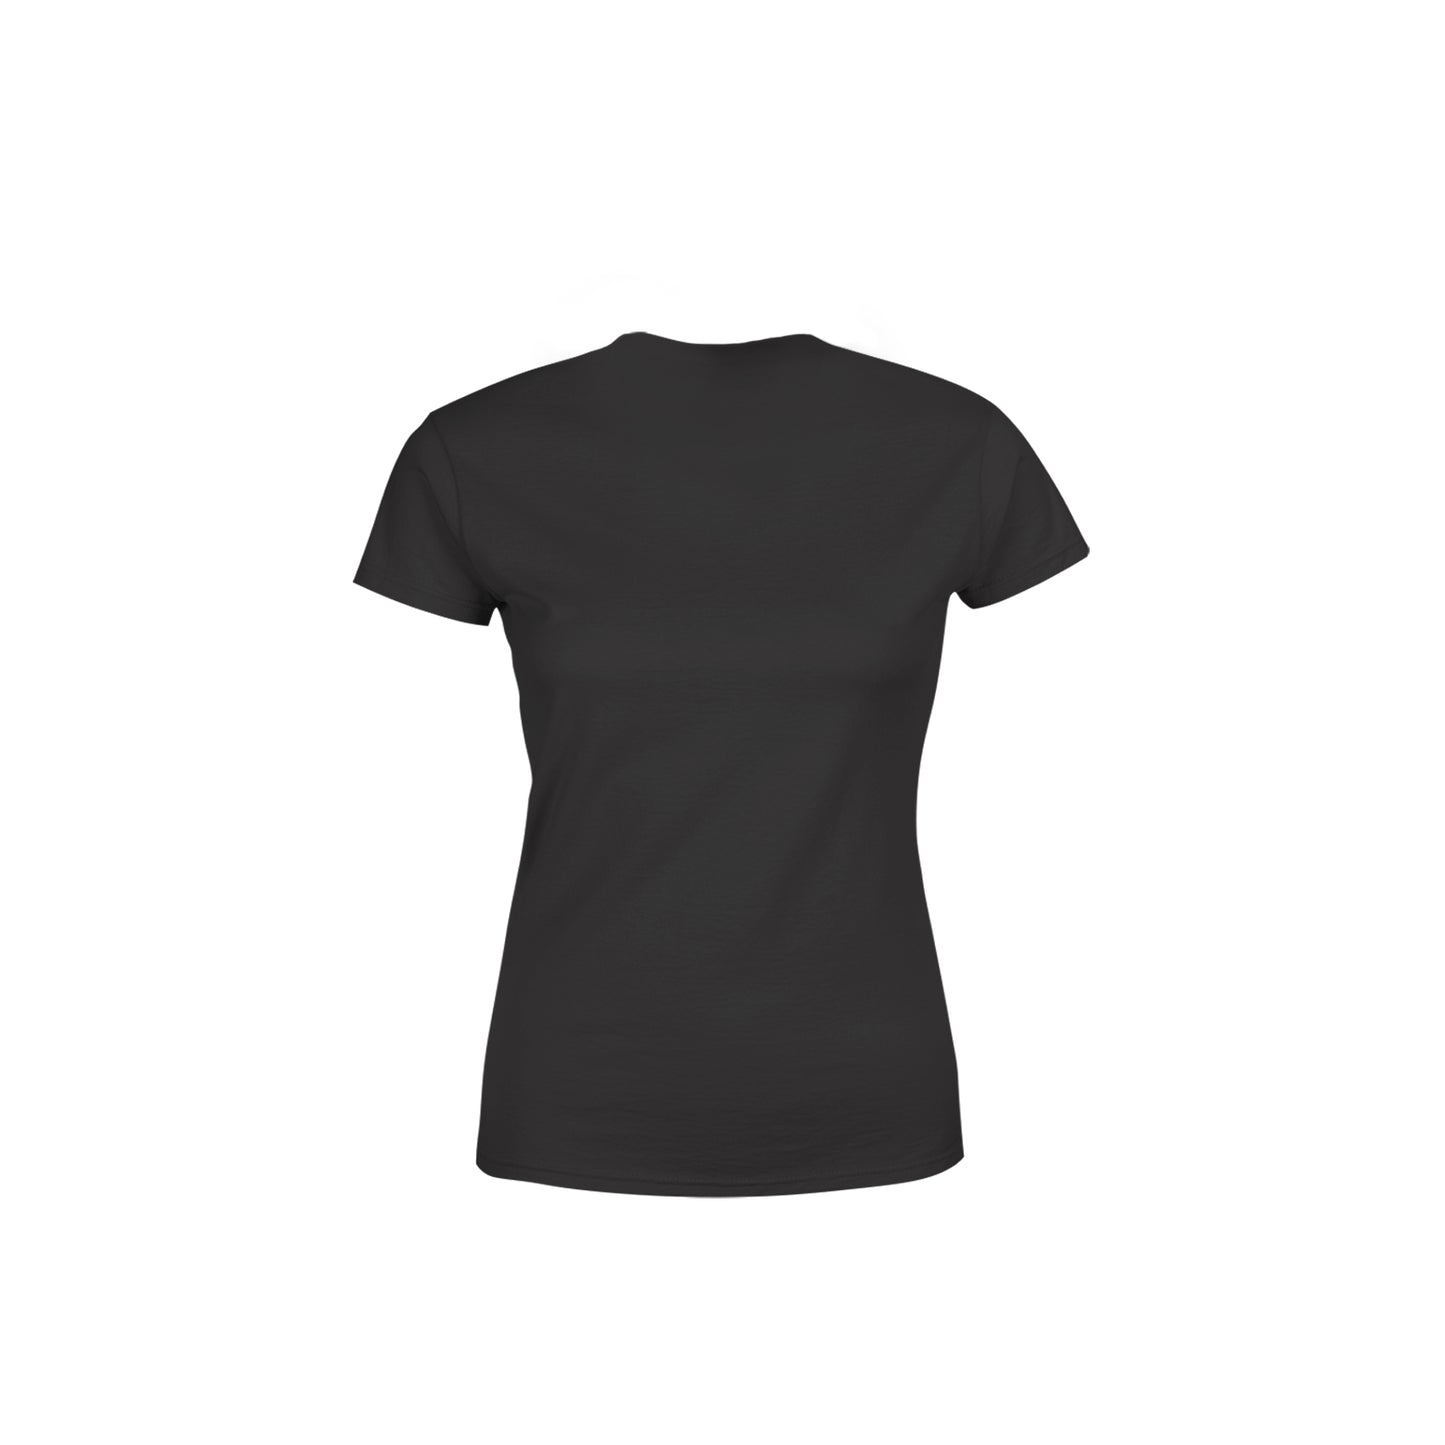 00 Number Women's T-Shirt (Black)